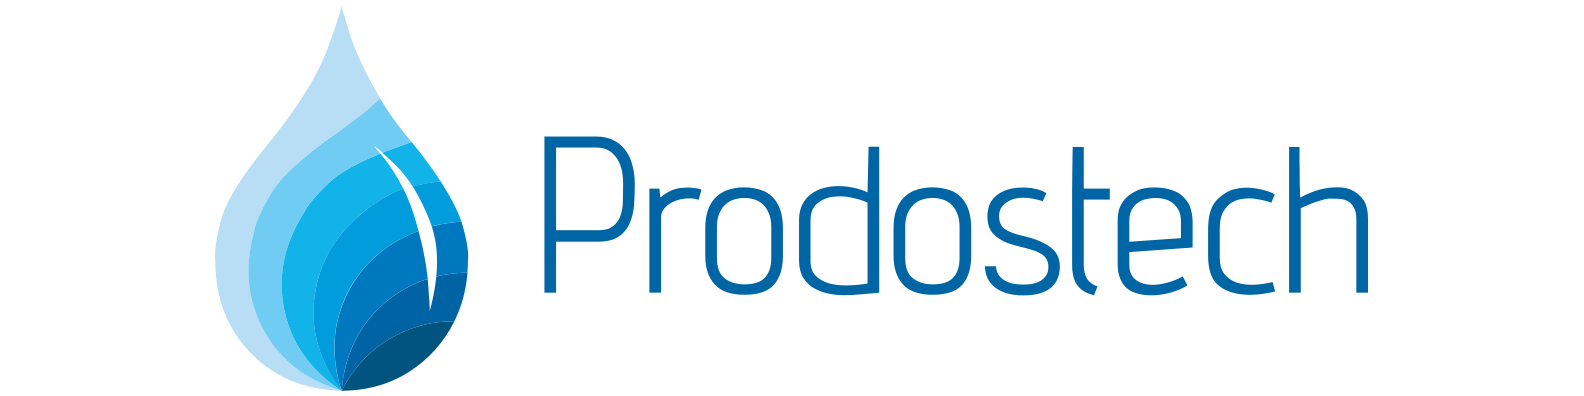 Prodostech-shop